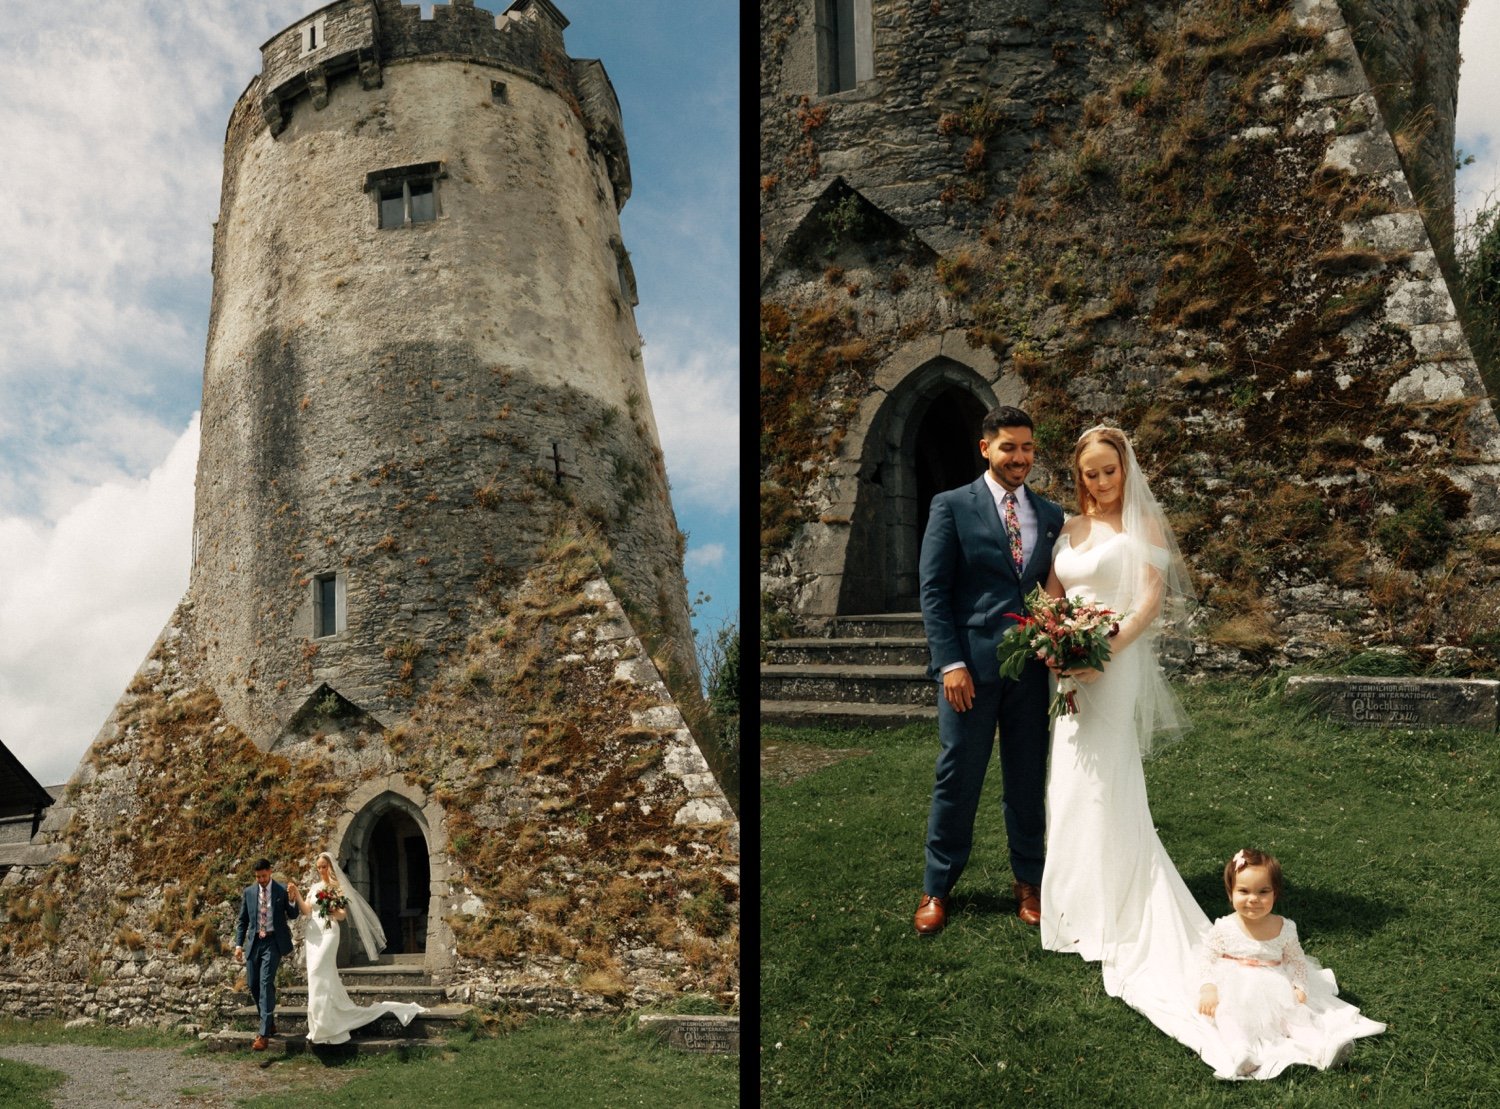 19_Ireland-cliff-elopement-wedding-photographer-kmp-photography-8533_Ireland-cliff-elopement-wedding-photographer-kmp-photography-8591.jpg